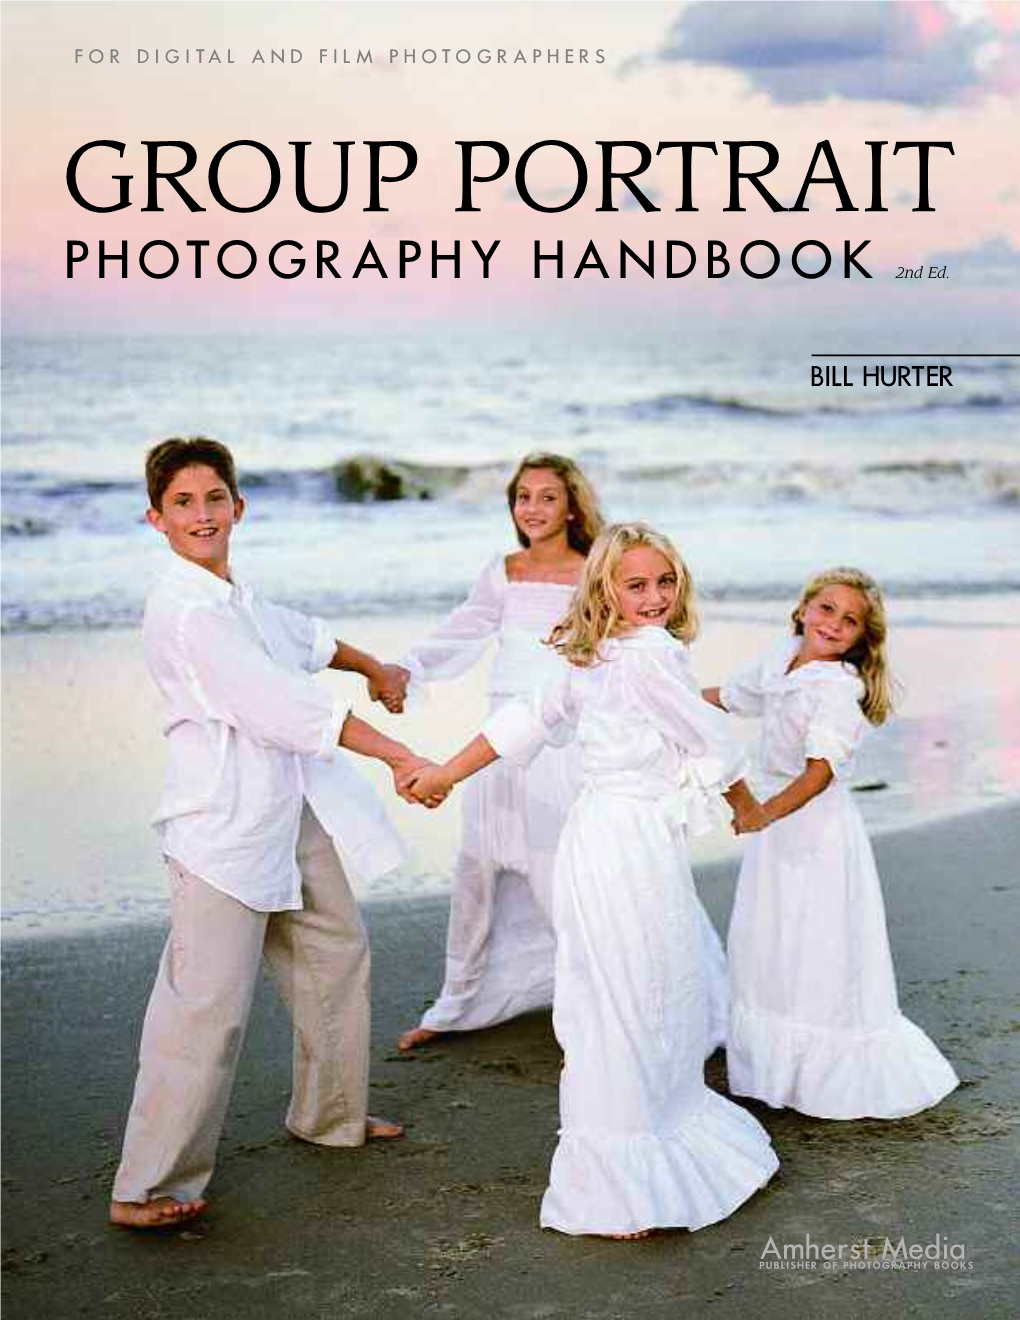 Bill Hurter. Group Portrait Photography Handbook, 2Nd Ed. 2005